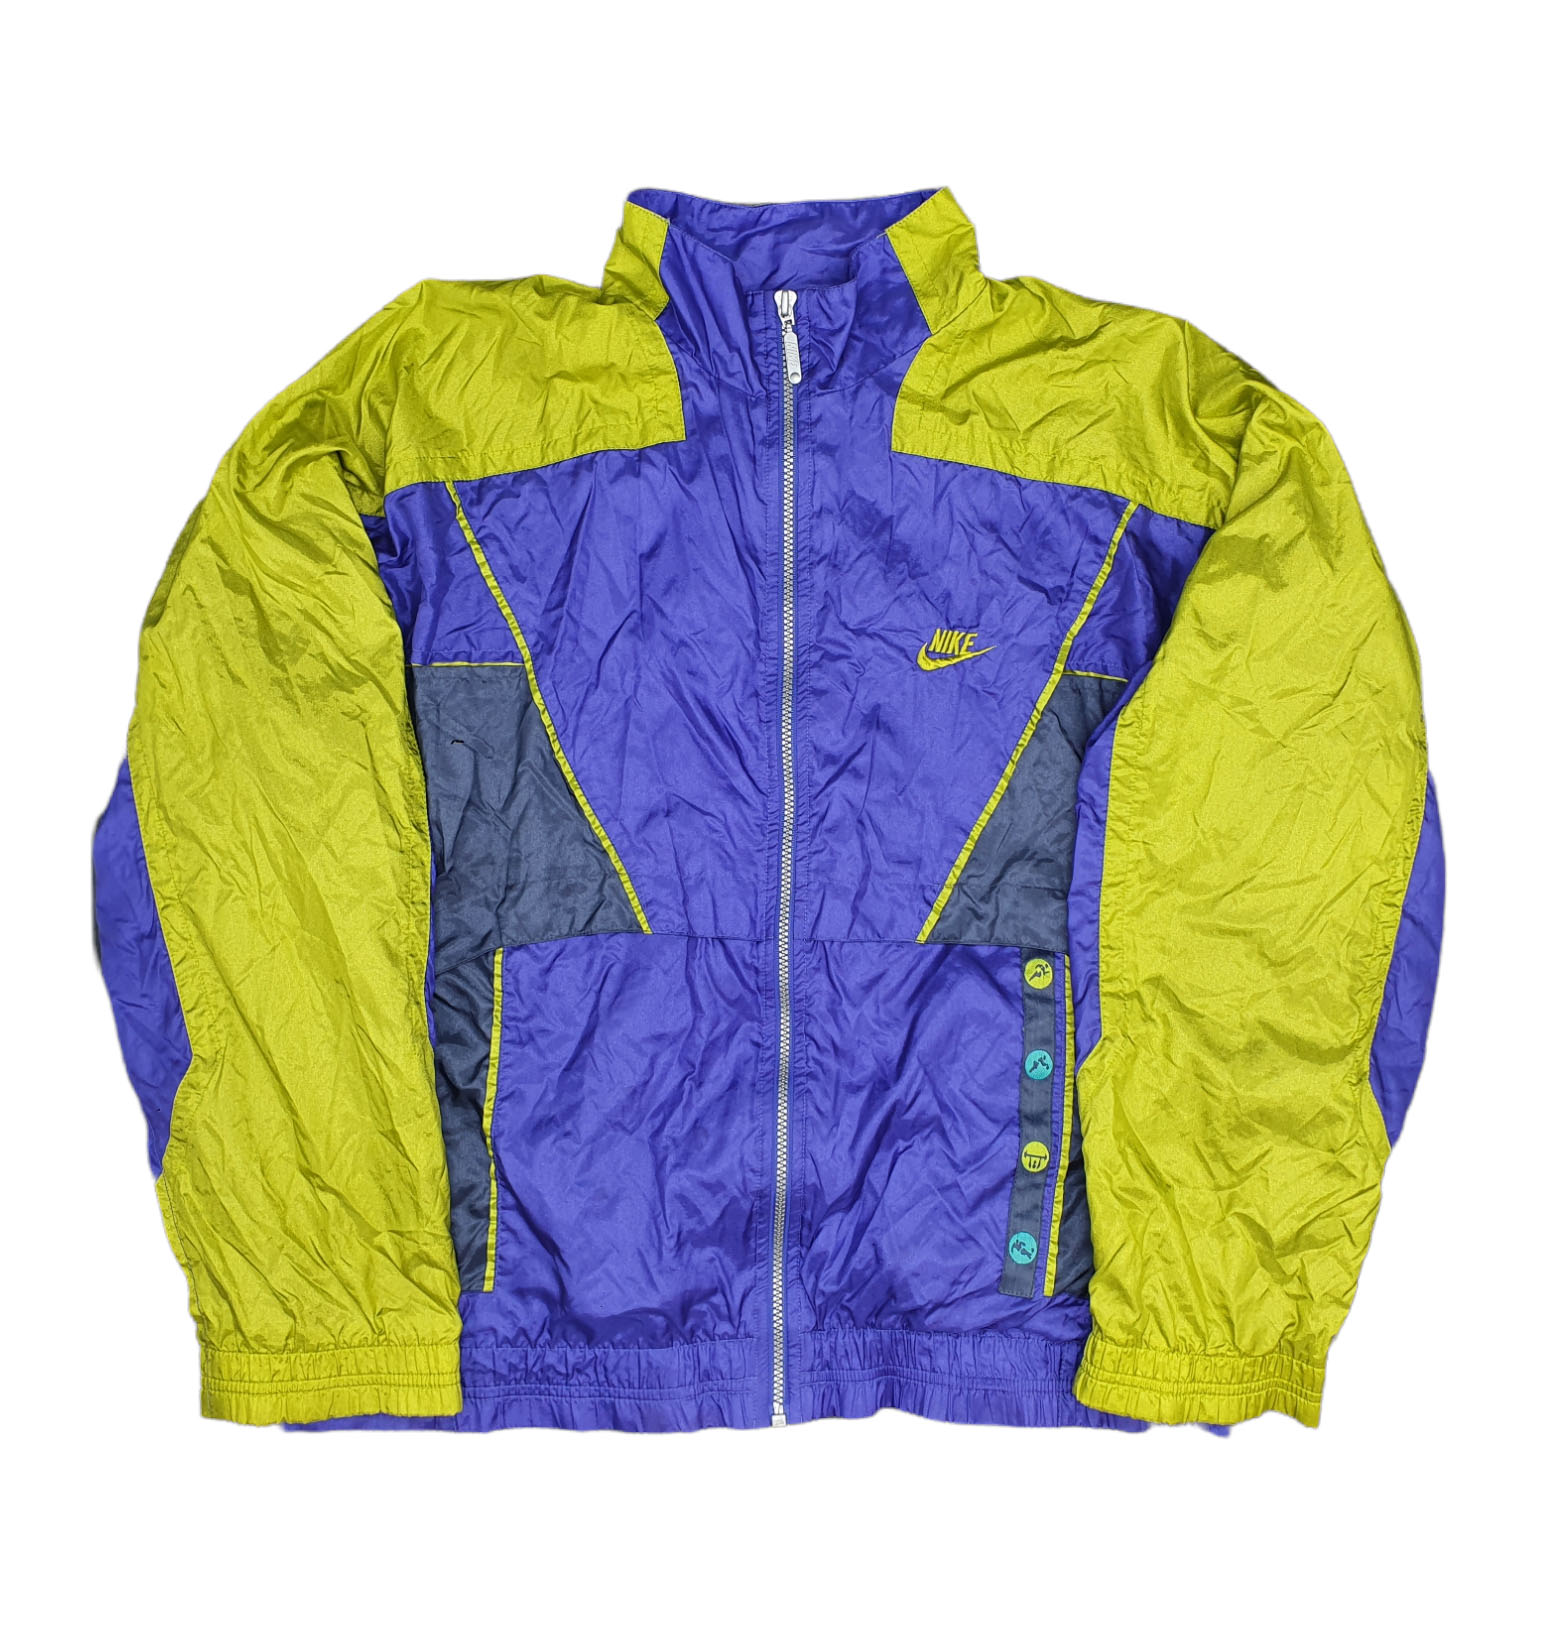 Nike giacca vintage anni '80